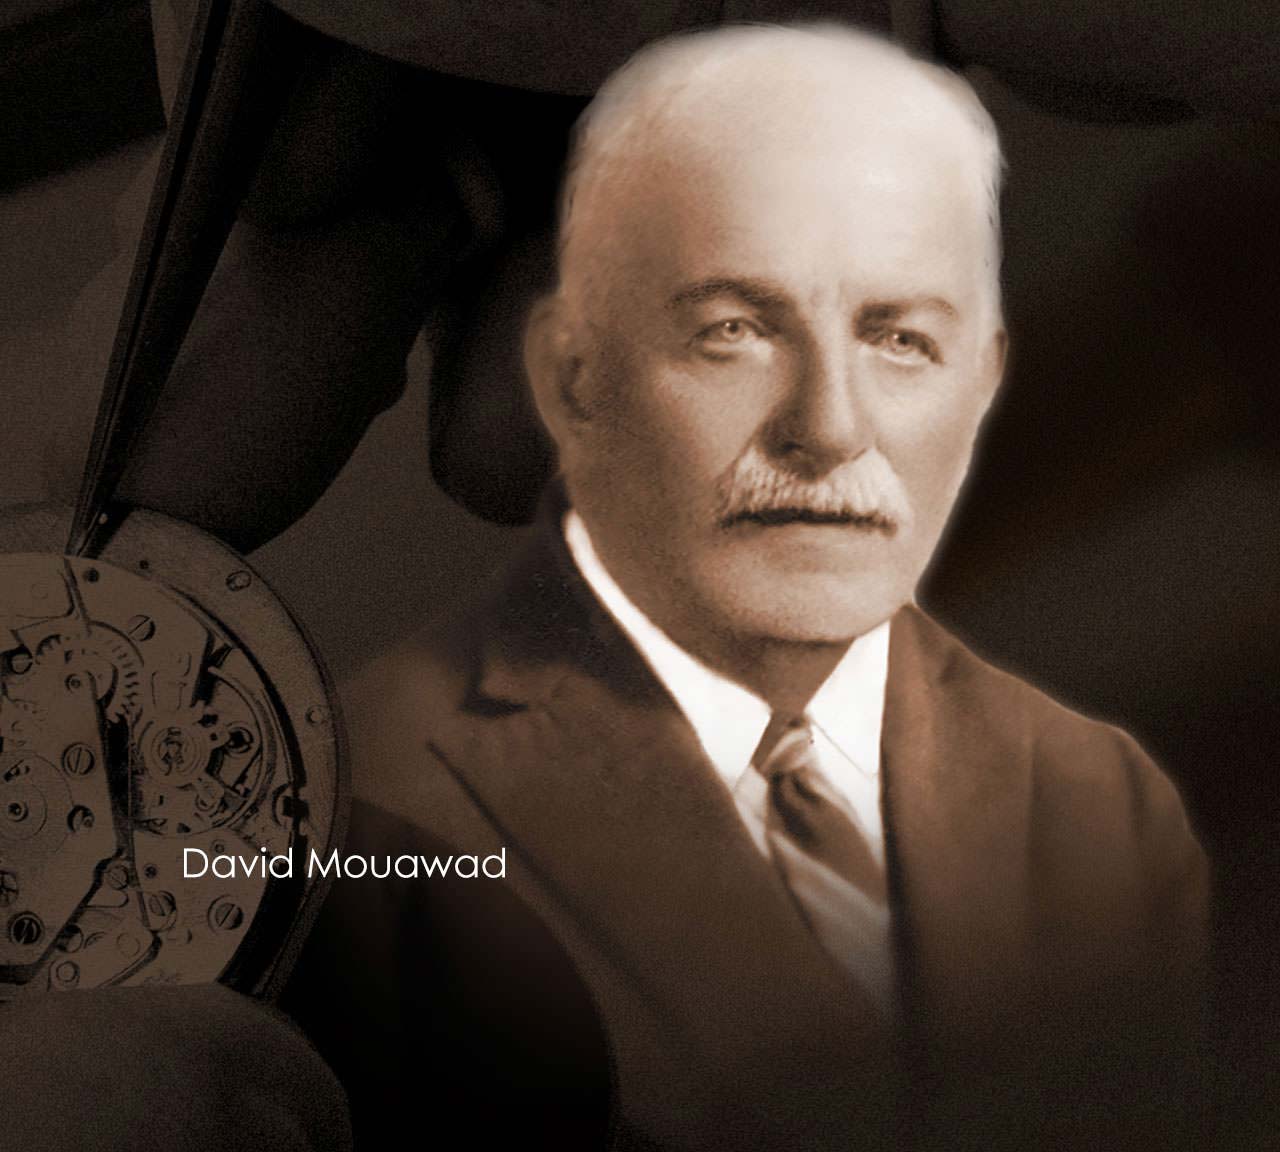 David Mouawad